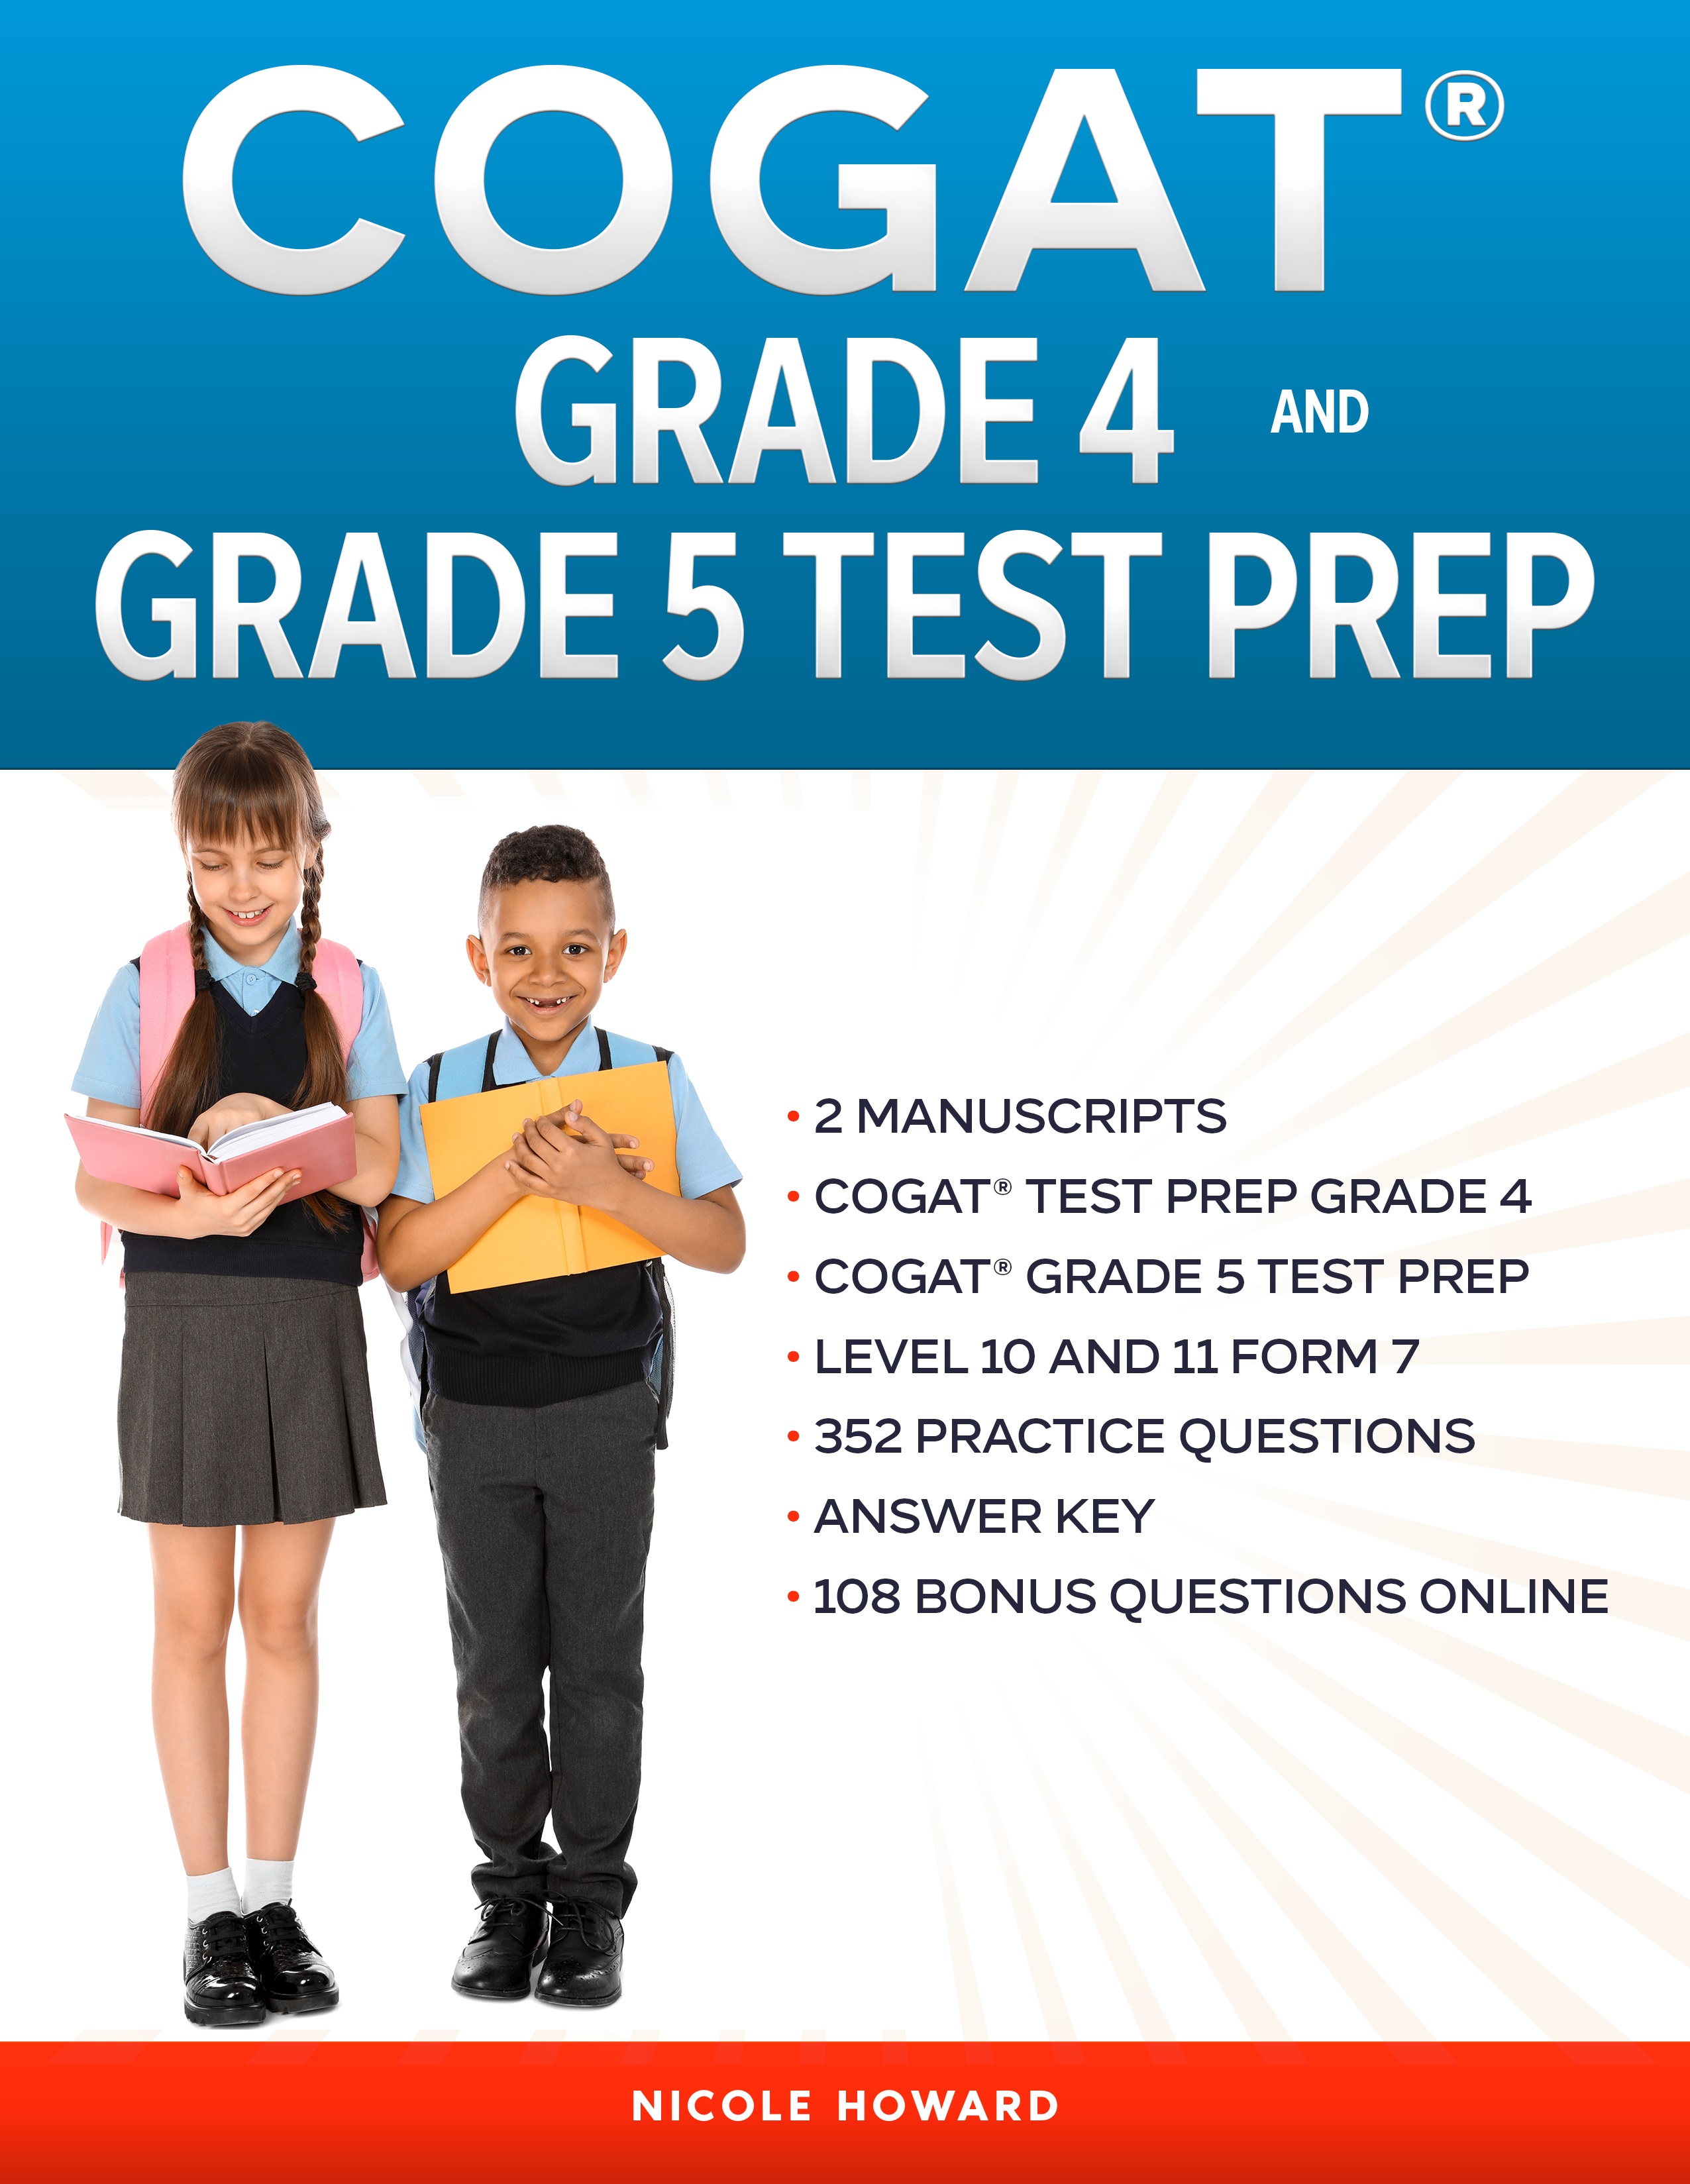 COGAT GRADE 4 AND 5 TEST PREP